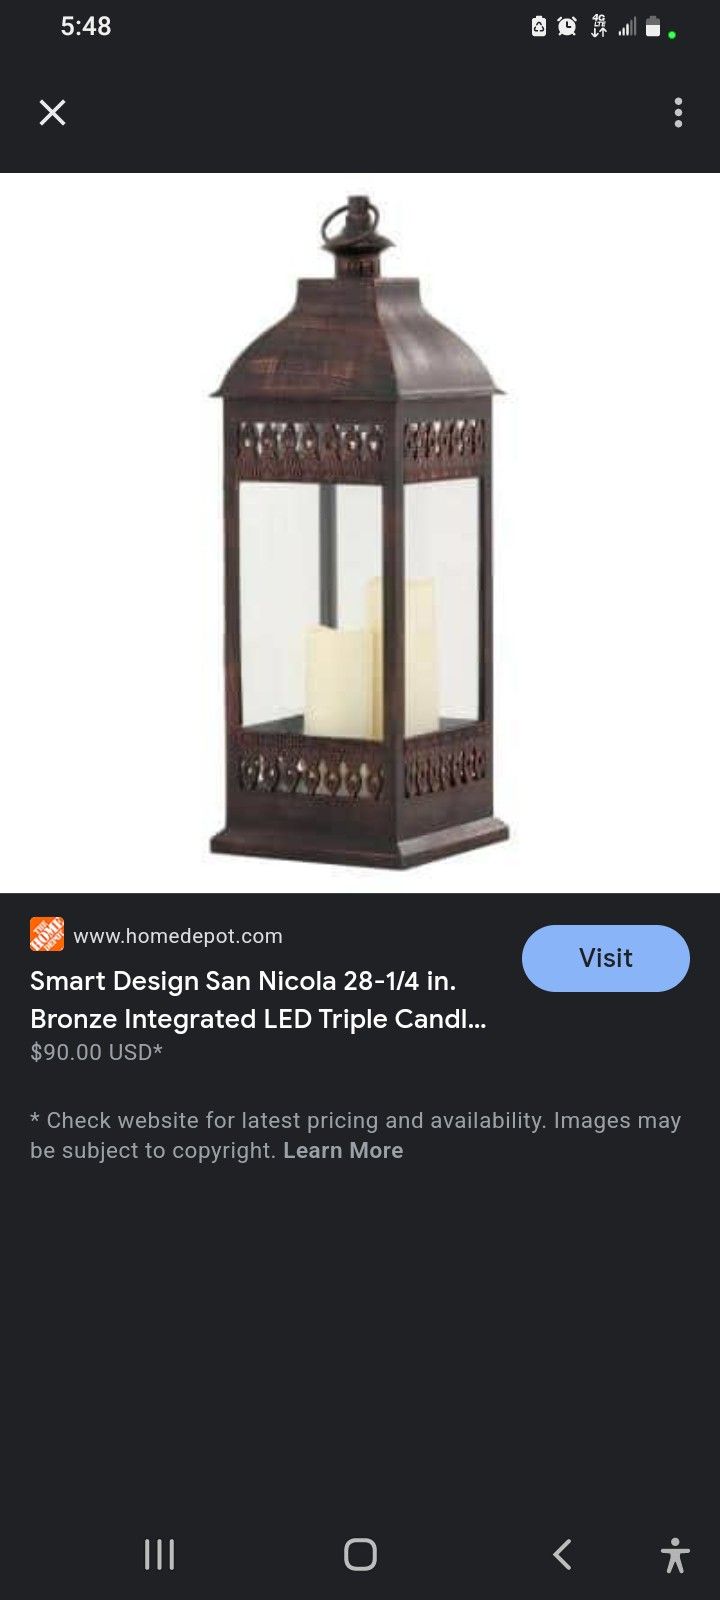 San Nicola Smart Lamps 